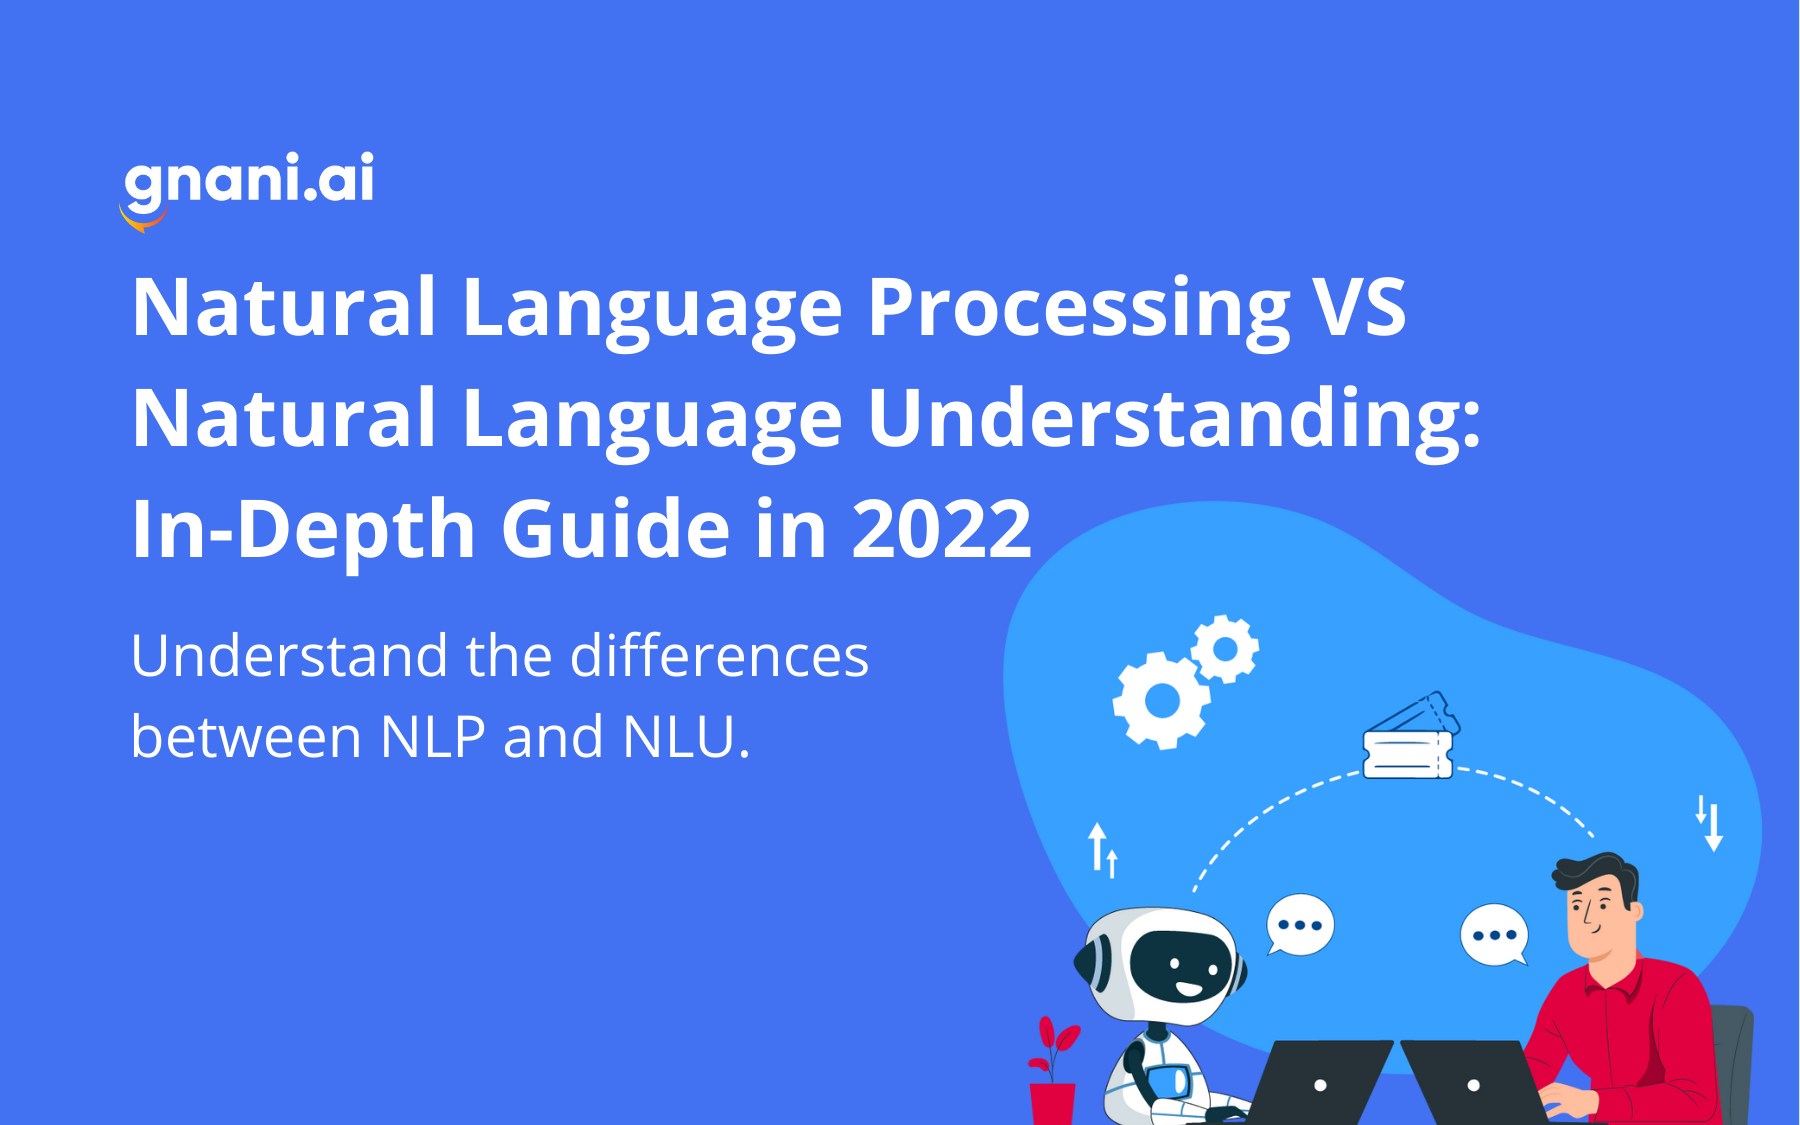 Natural Language Processing VS Natural Language Understanding